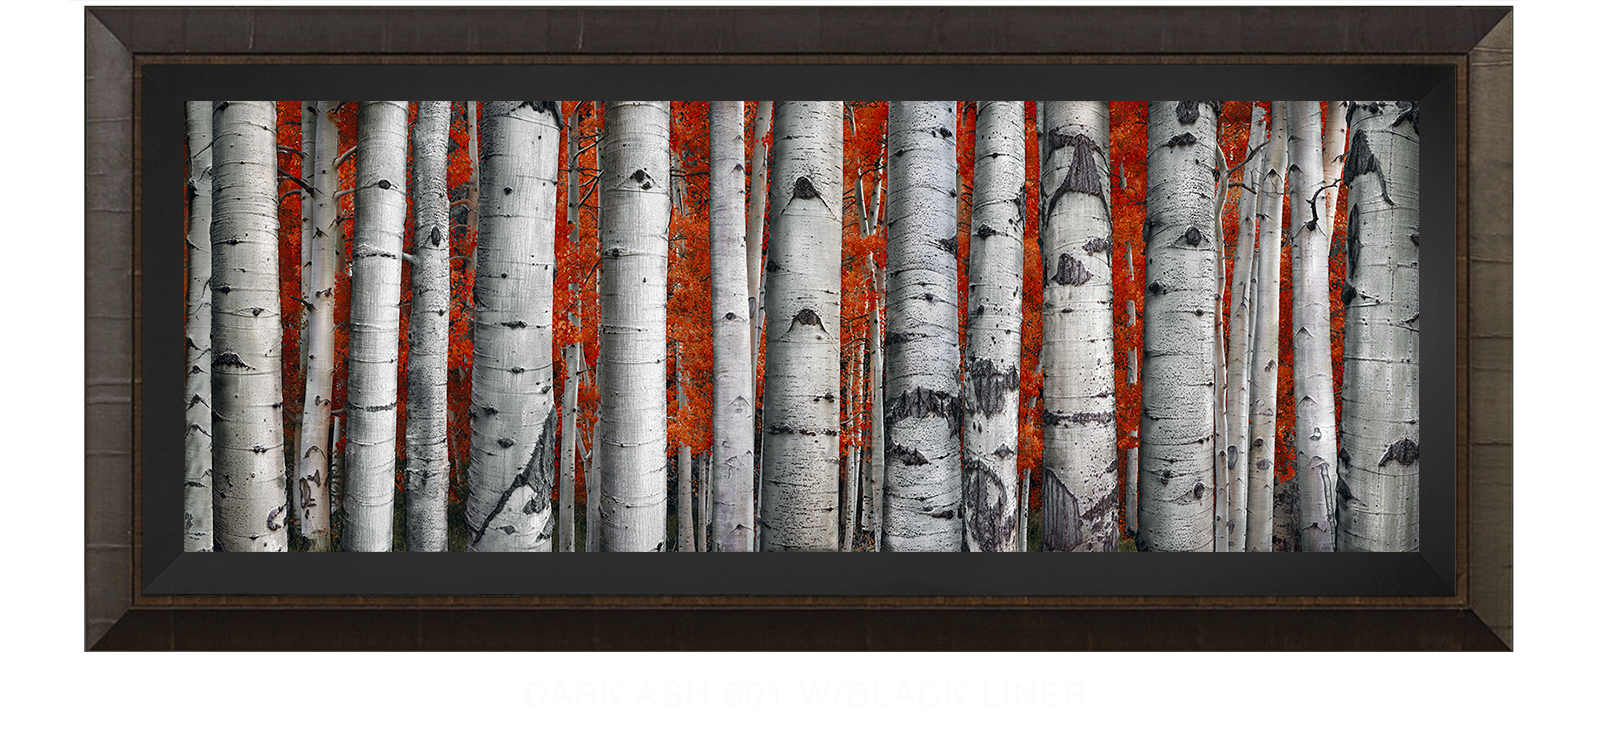 26ASPEN Dark Ash 601 w_Blk Liner T